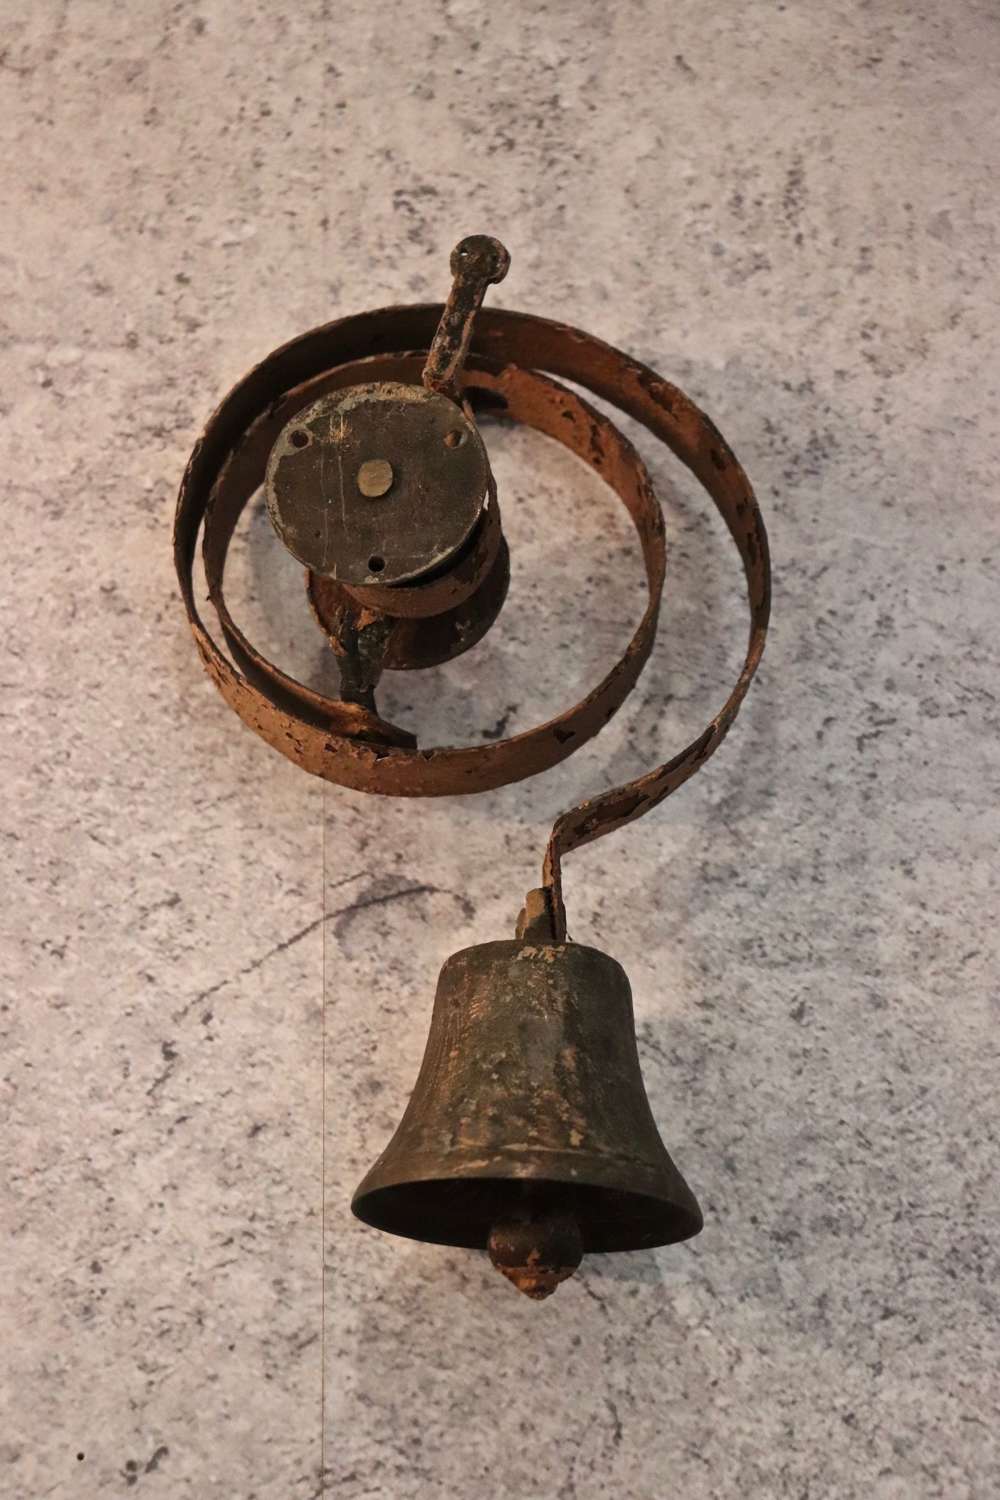 Victorian servants' bell